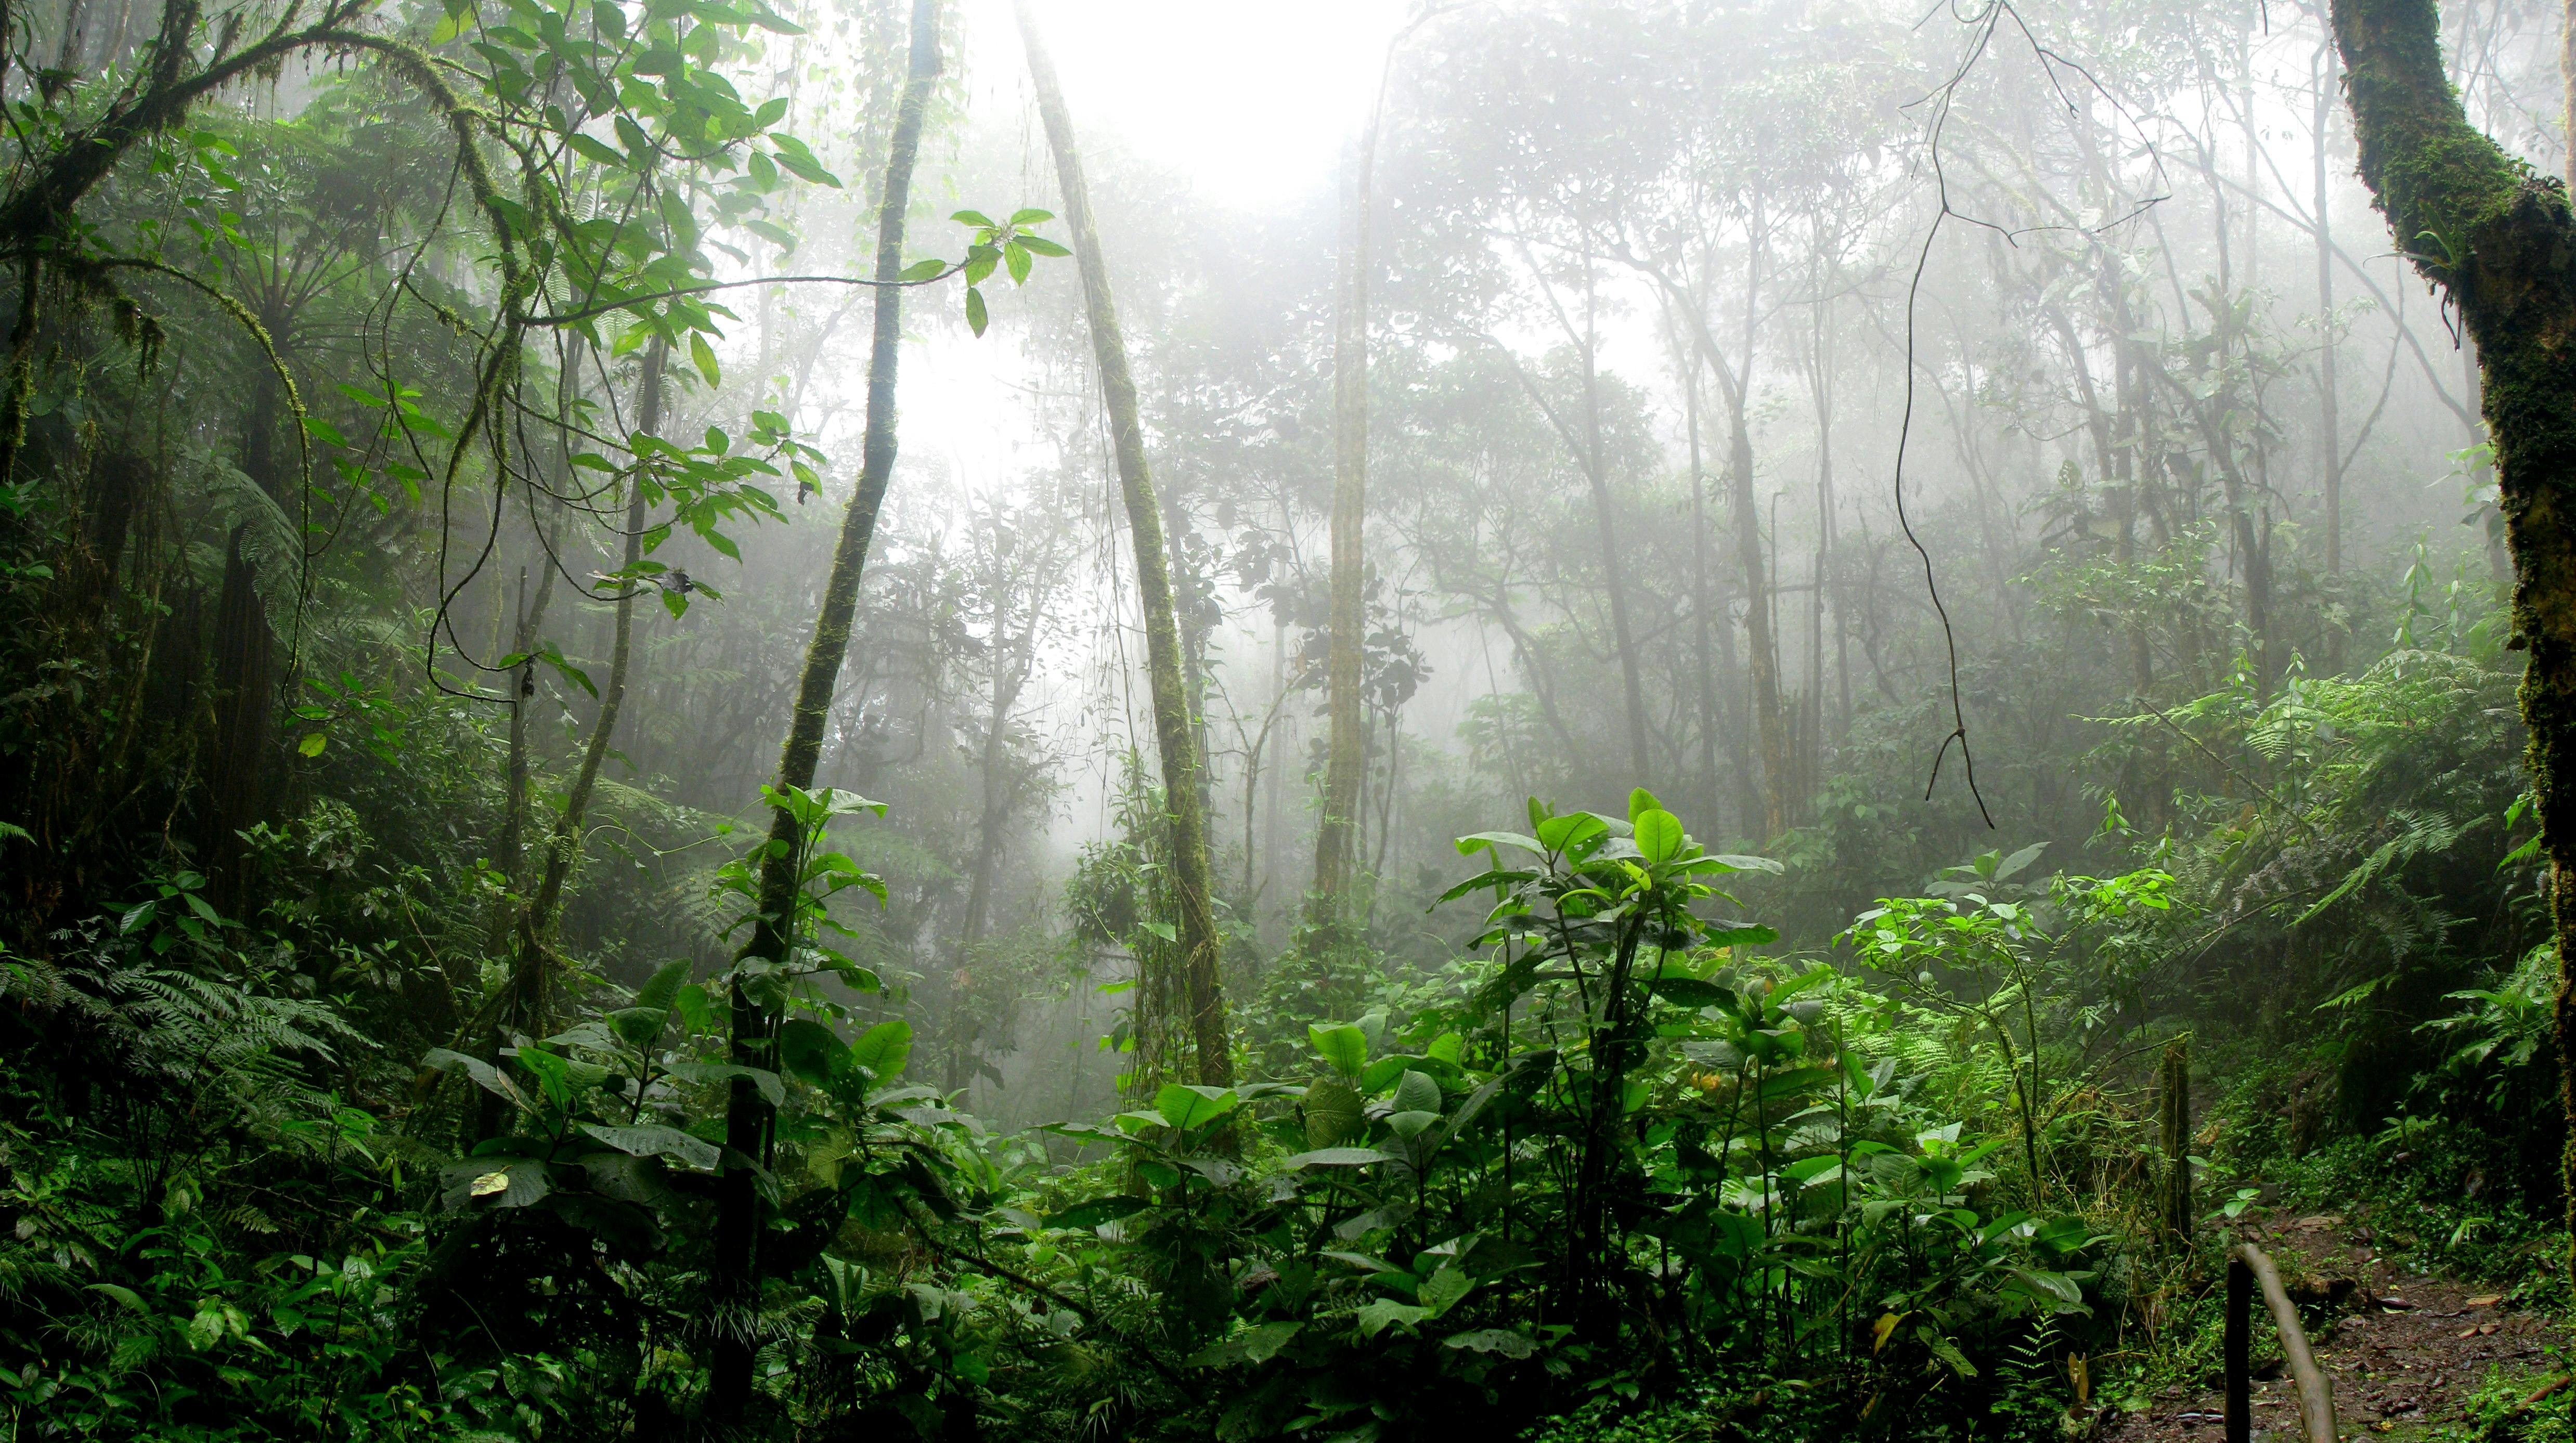 Rainforest Photos, Download The BEST Free Rainforest Stock Photos